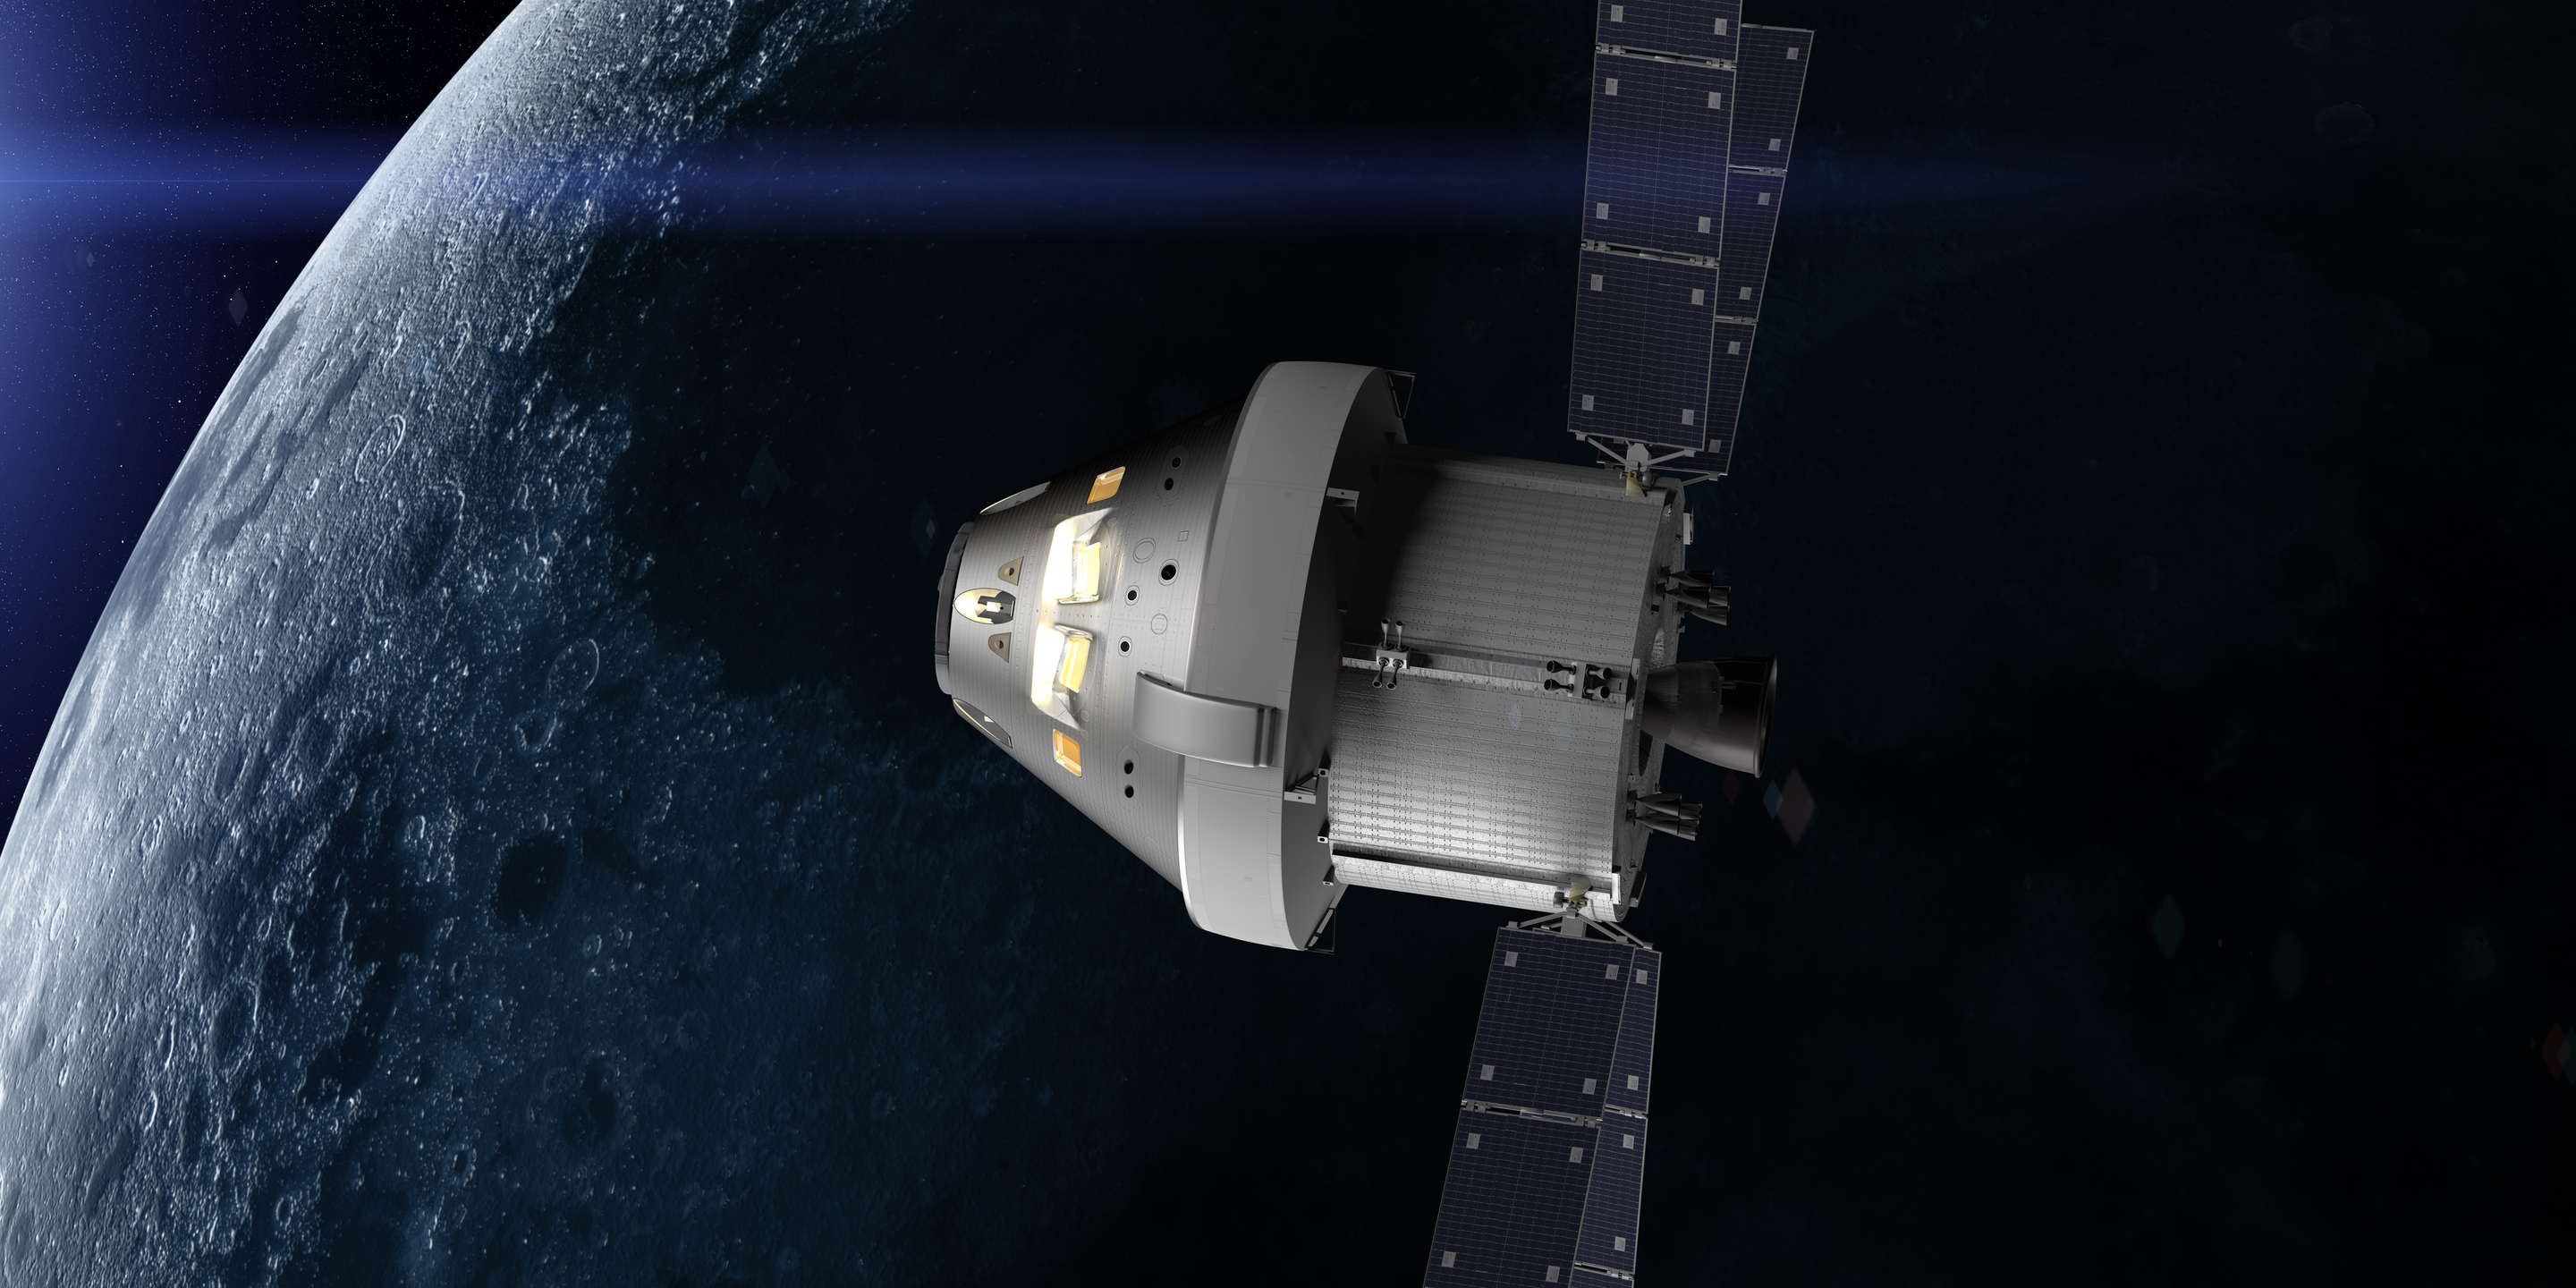 3.5” SPACE PATCH ARTEMIS ASTRONAUT PROGRAM NASA LUNAR GATEWAY